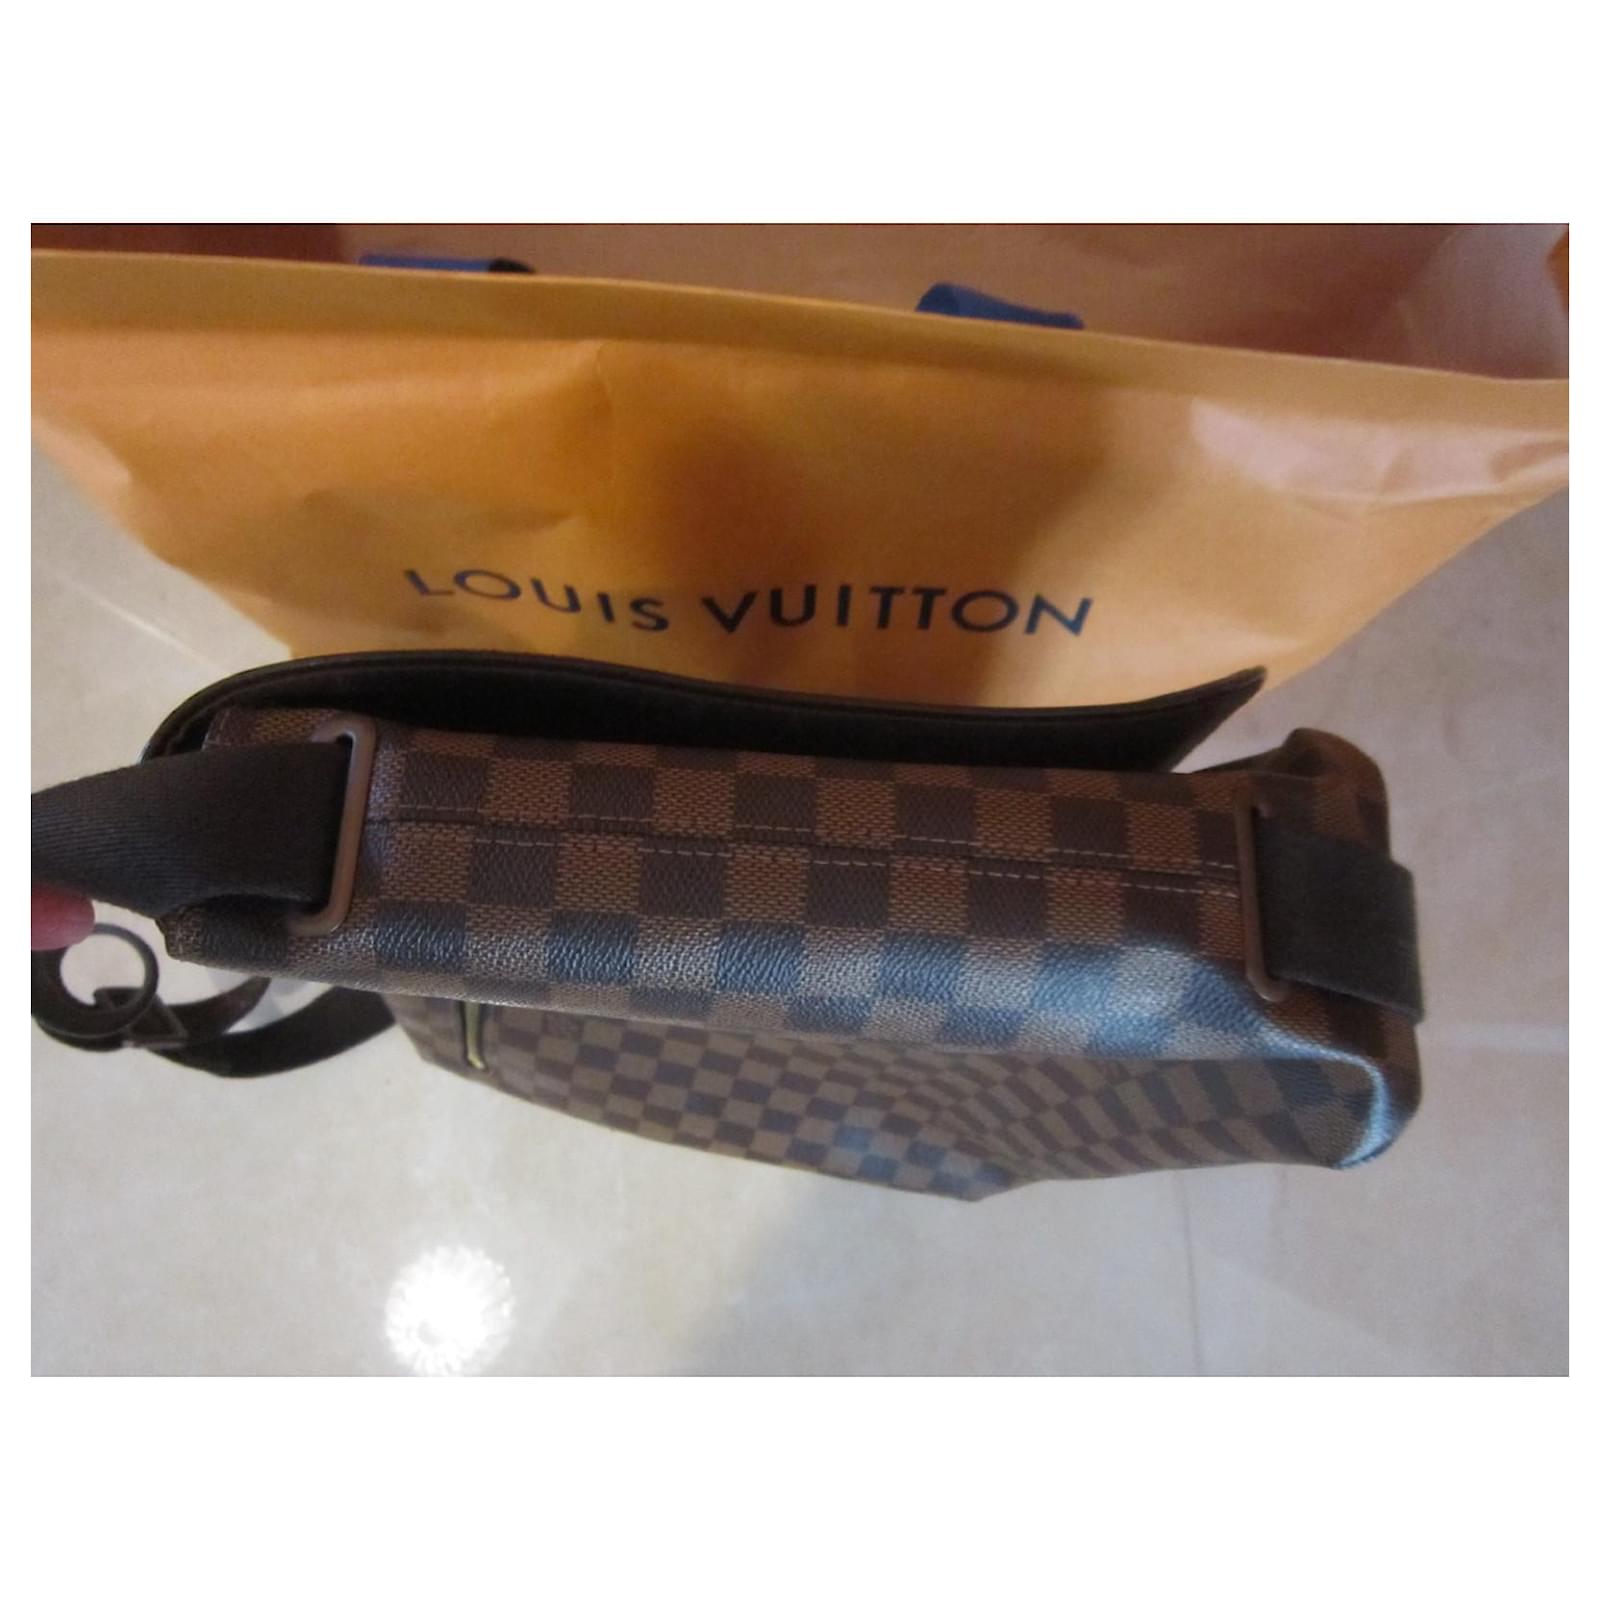 Louis Vuitton LV Brooklyn Damier GM Messenger Bag 